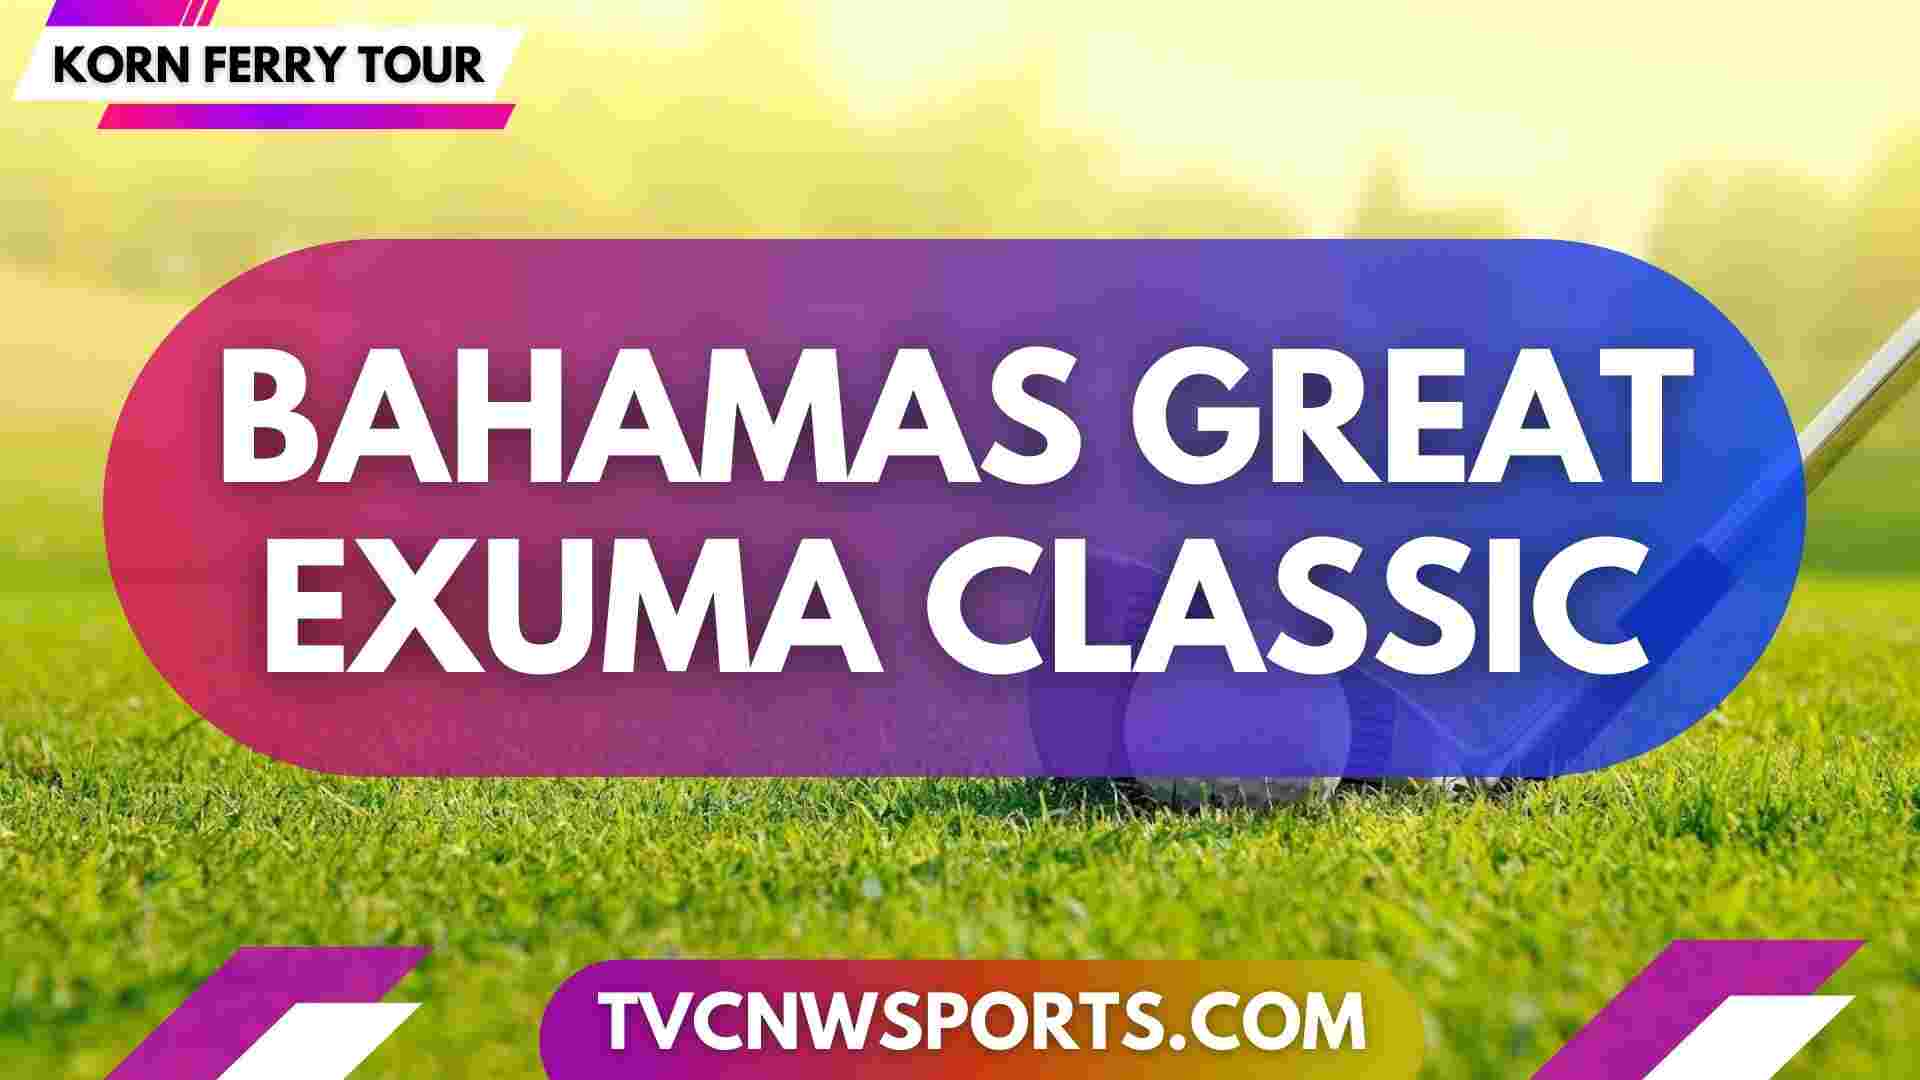 Bahamas Great Exuma Classic Golf Korn Ferry